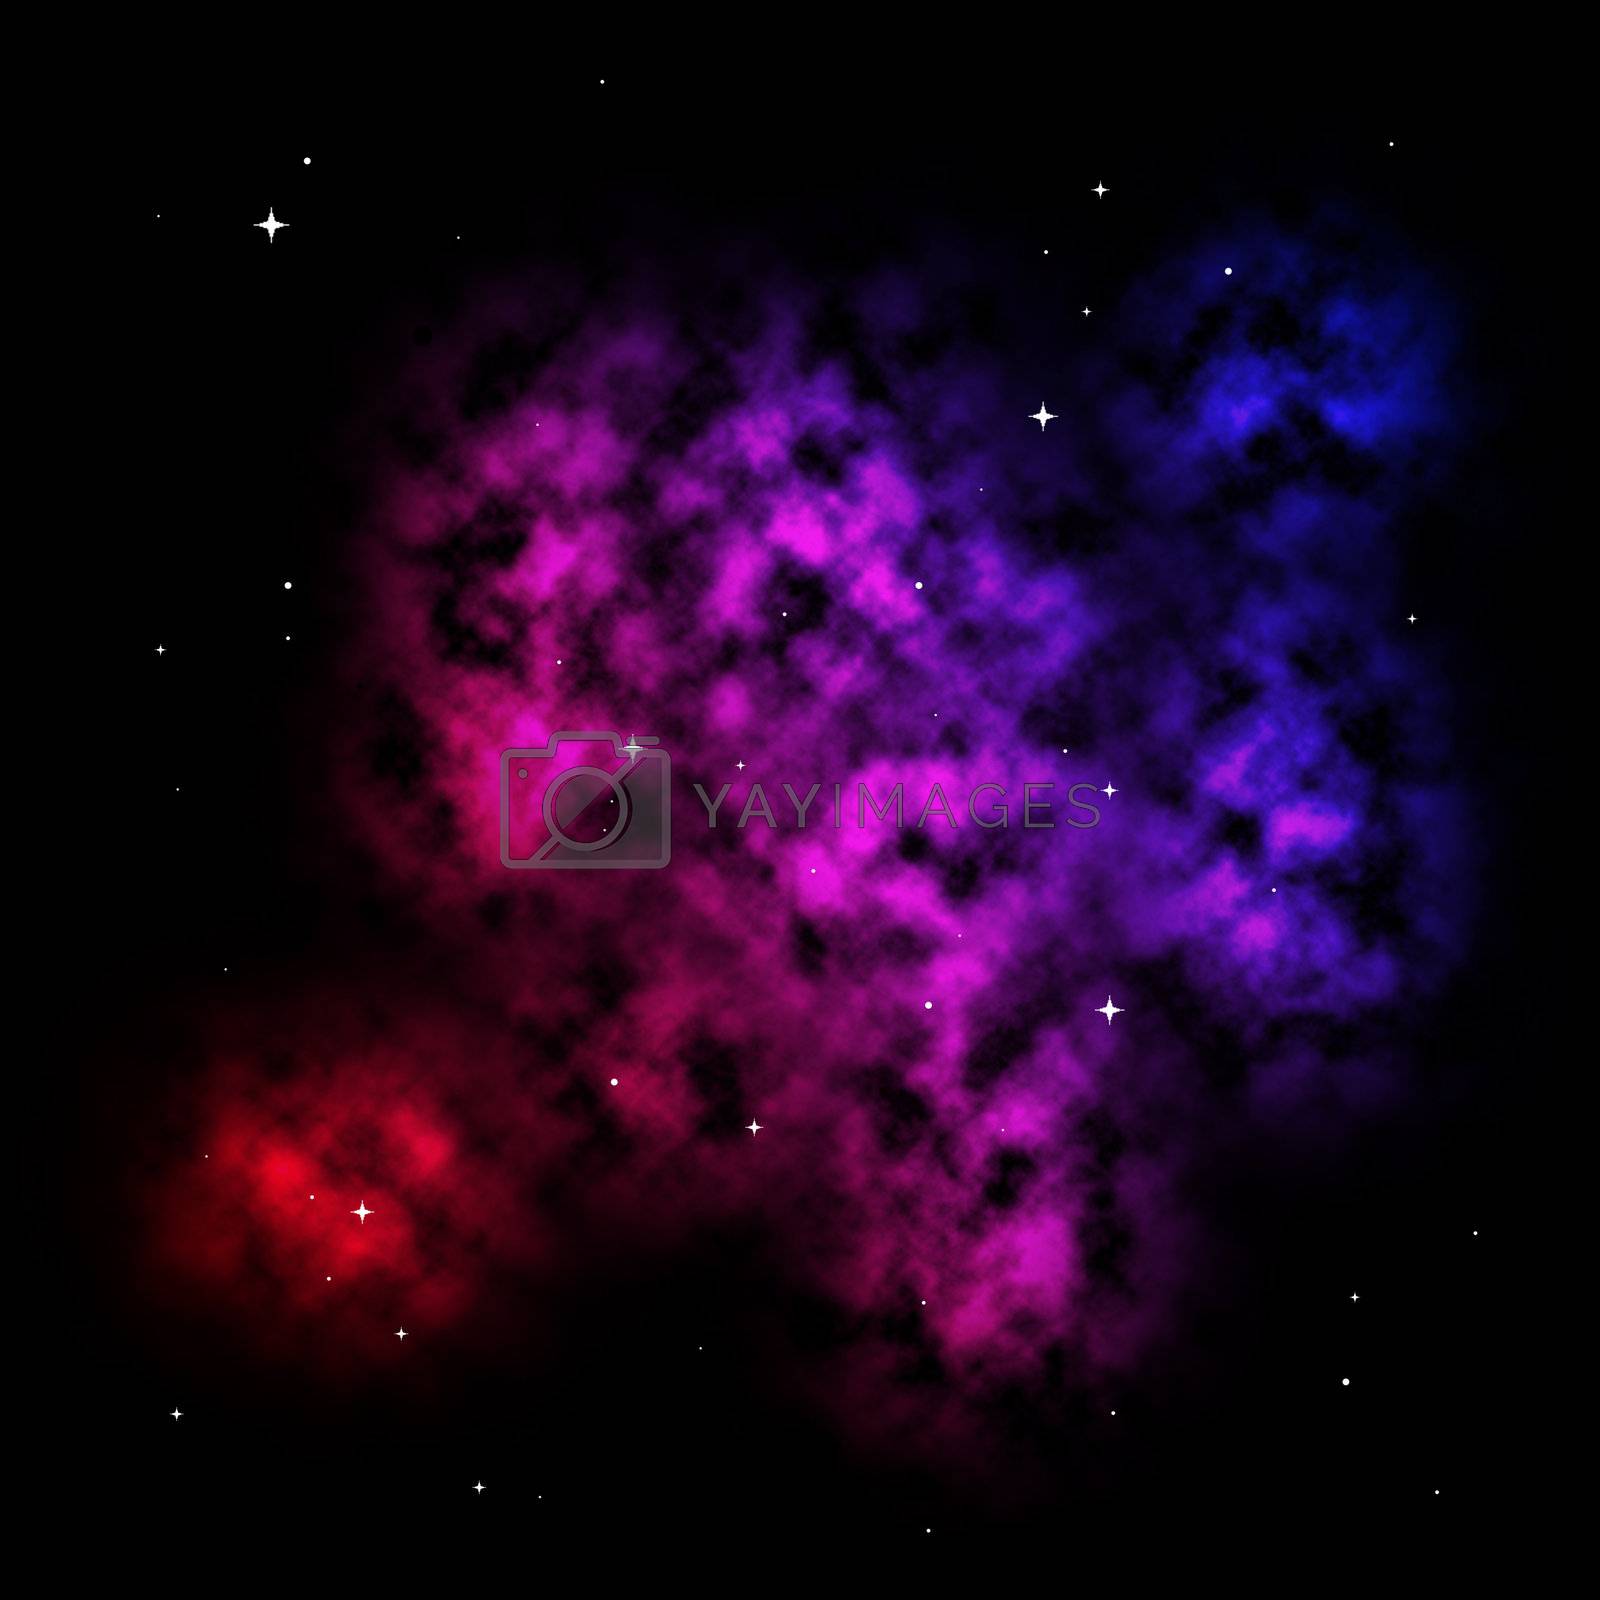 Royalty free image of Colorful Nebula by jclardy